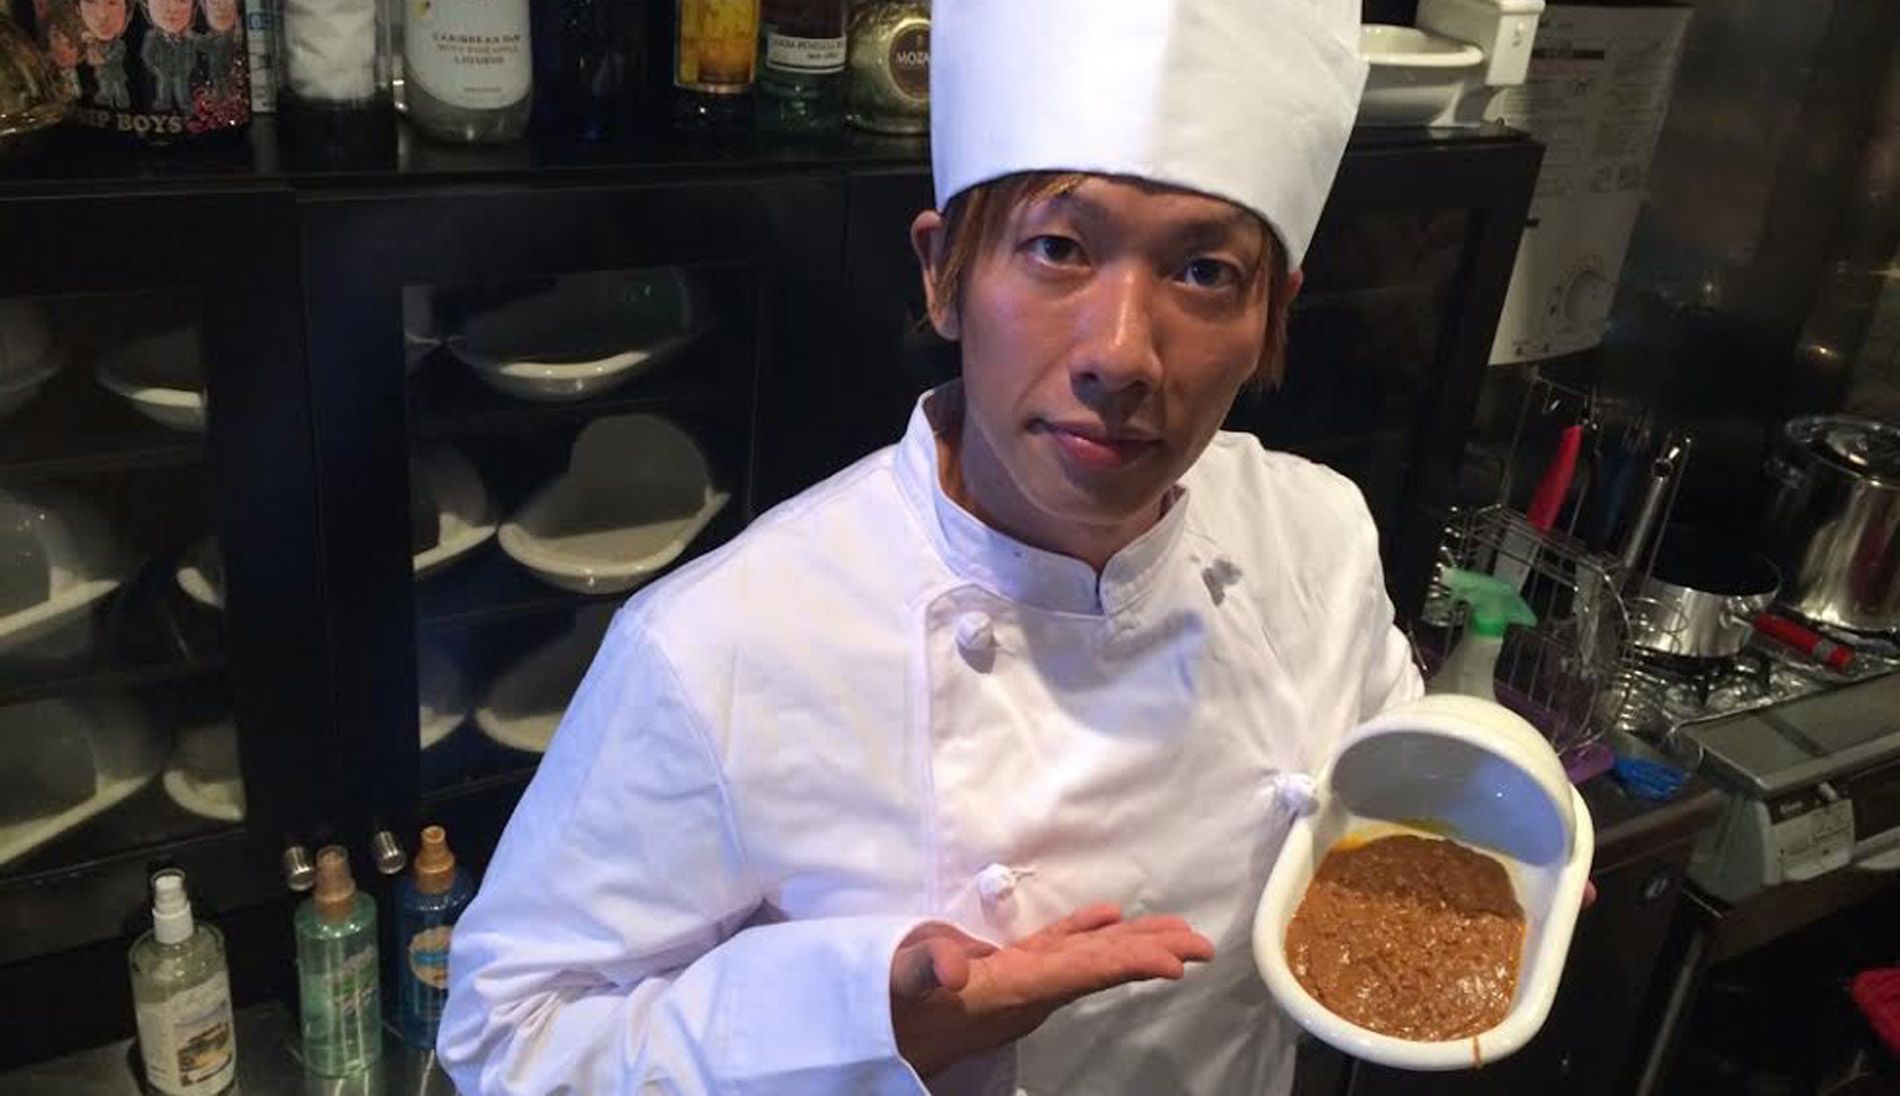 Japanese Nudist - Poo curry: Dish at Japanese restaurant mimics feces | CNN